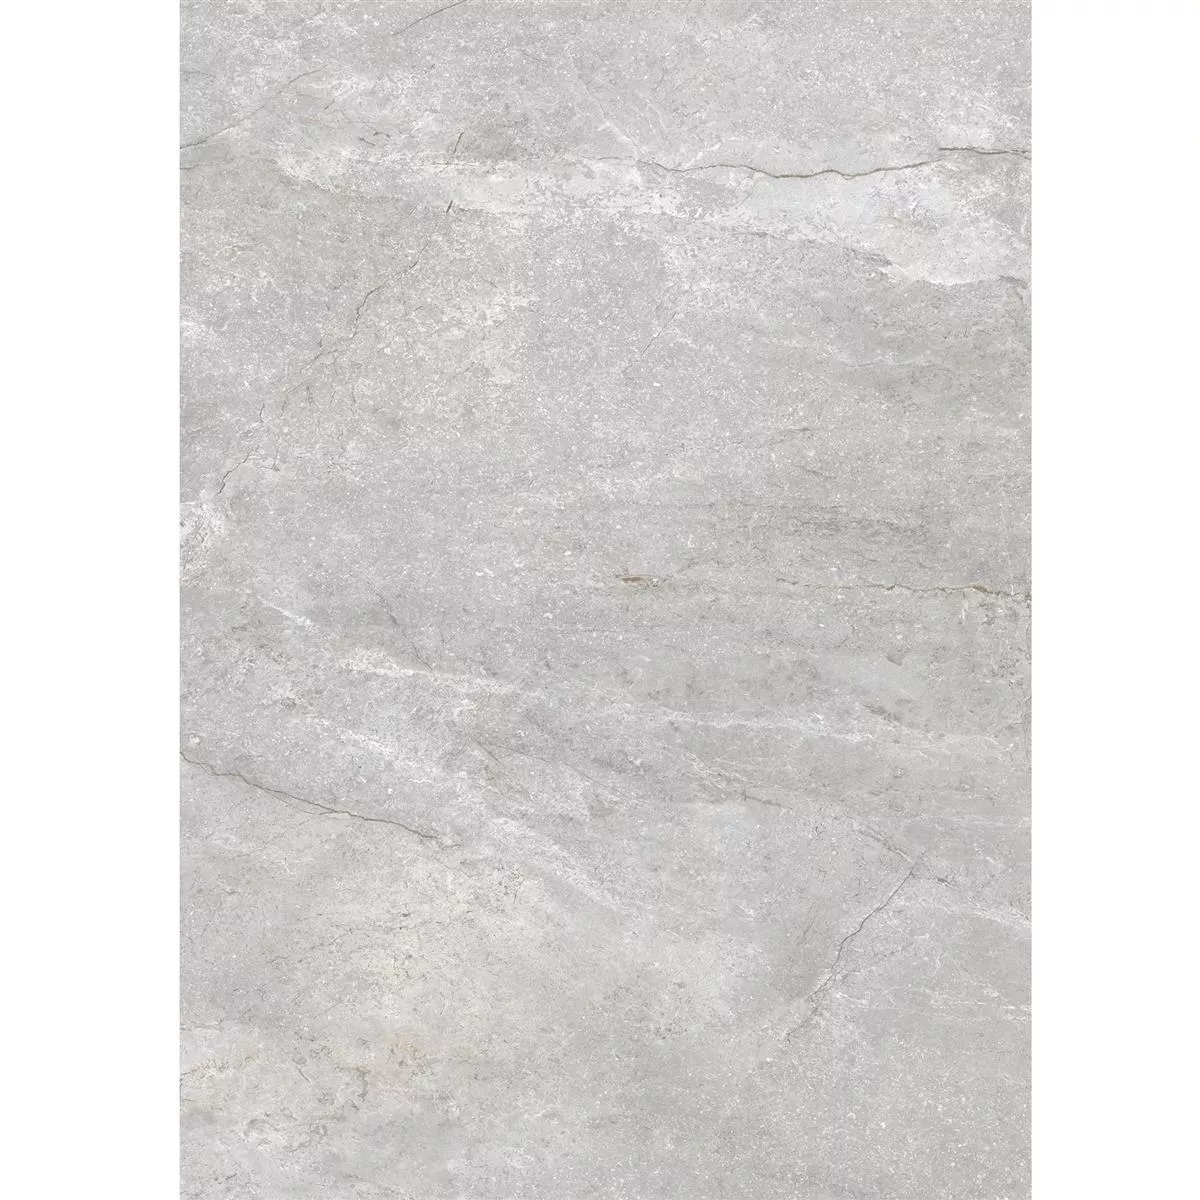 Vzorek Podlahové Dlaždice Pangea Mramorový Vzhled Matný Stříbrná 60x120cm